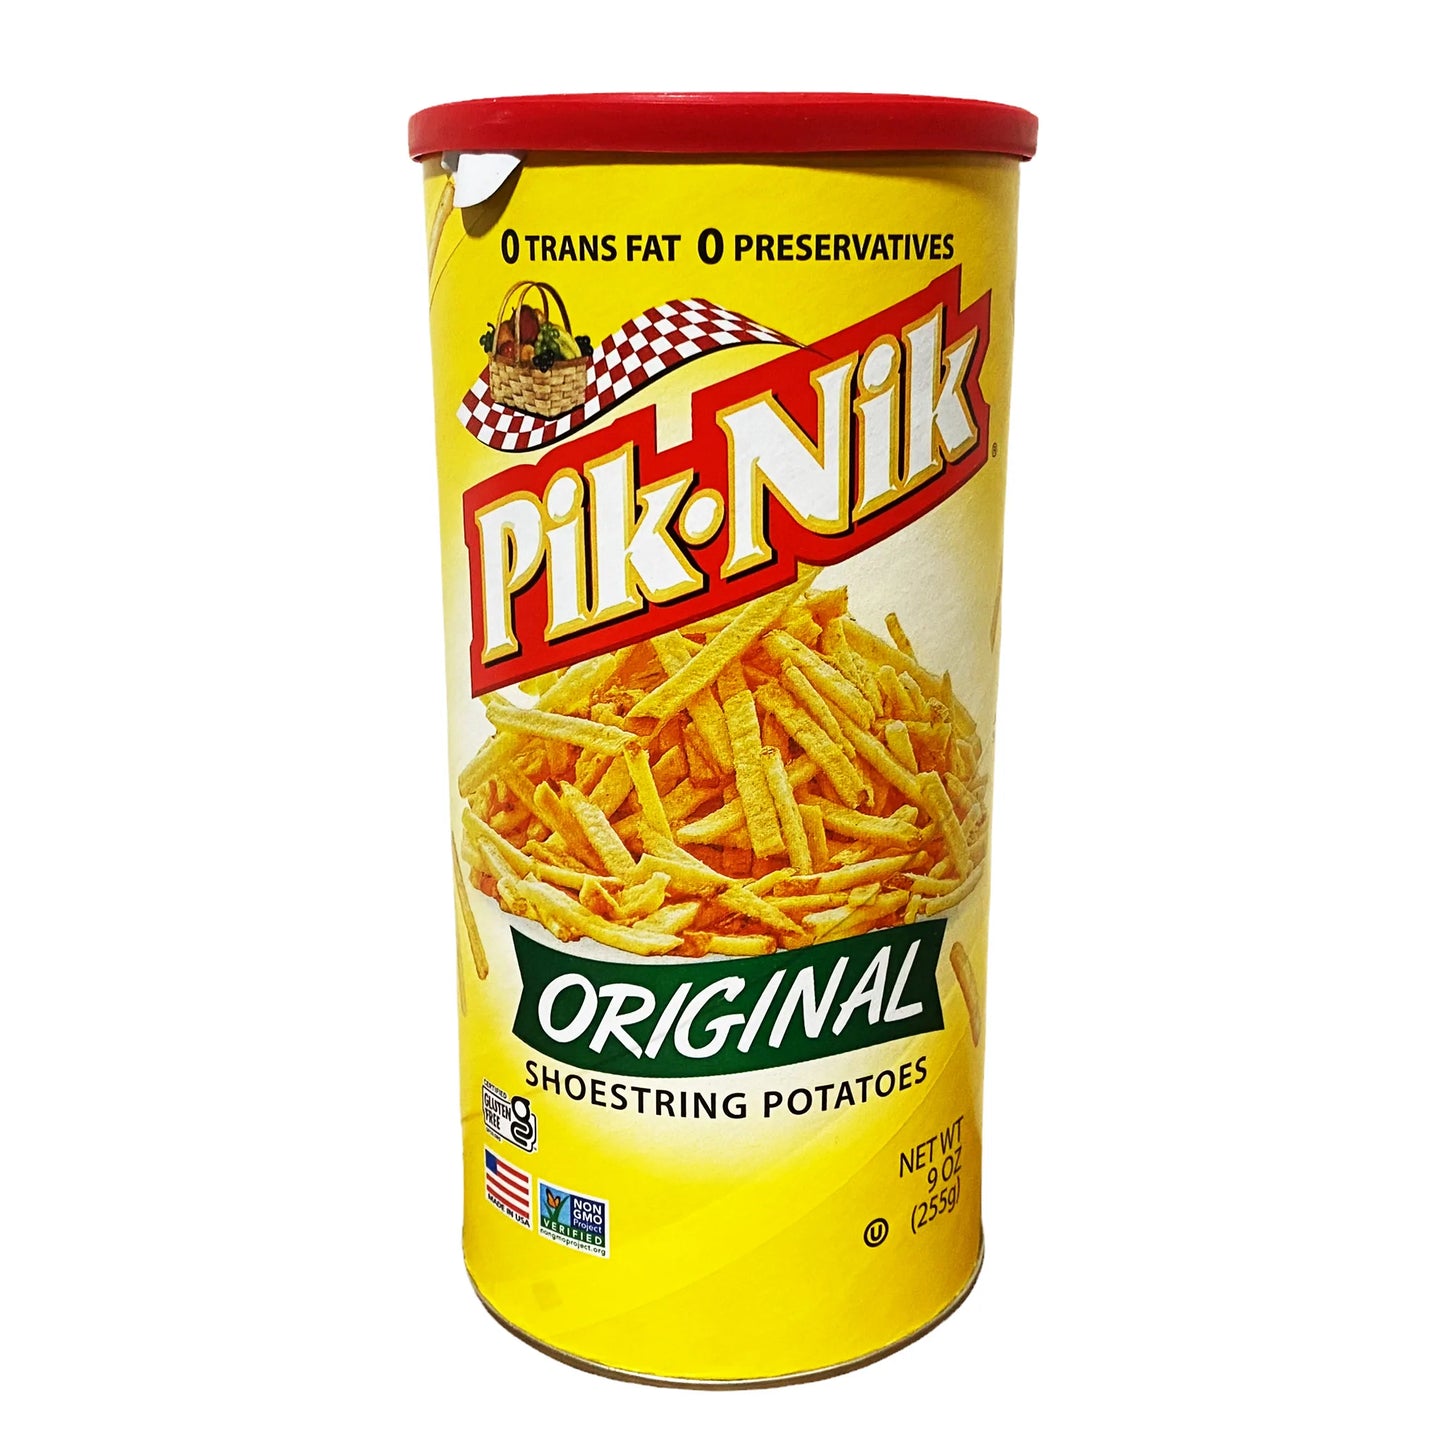 Pik-Nik Shoestring Potatoes Original 9oz